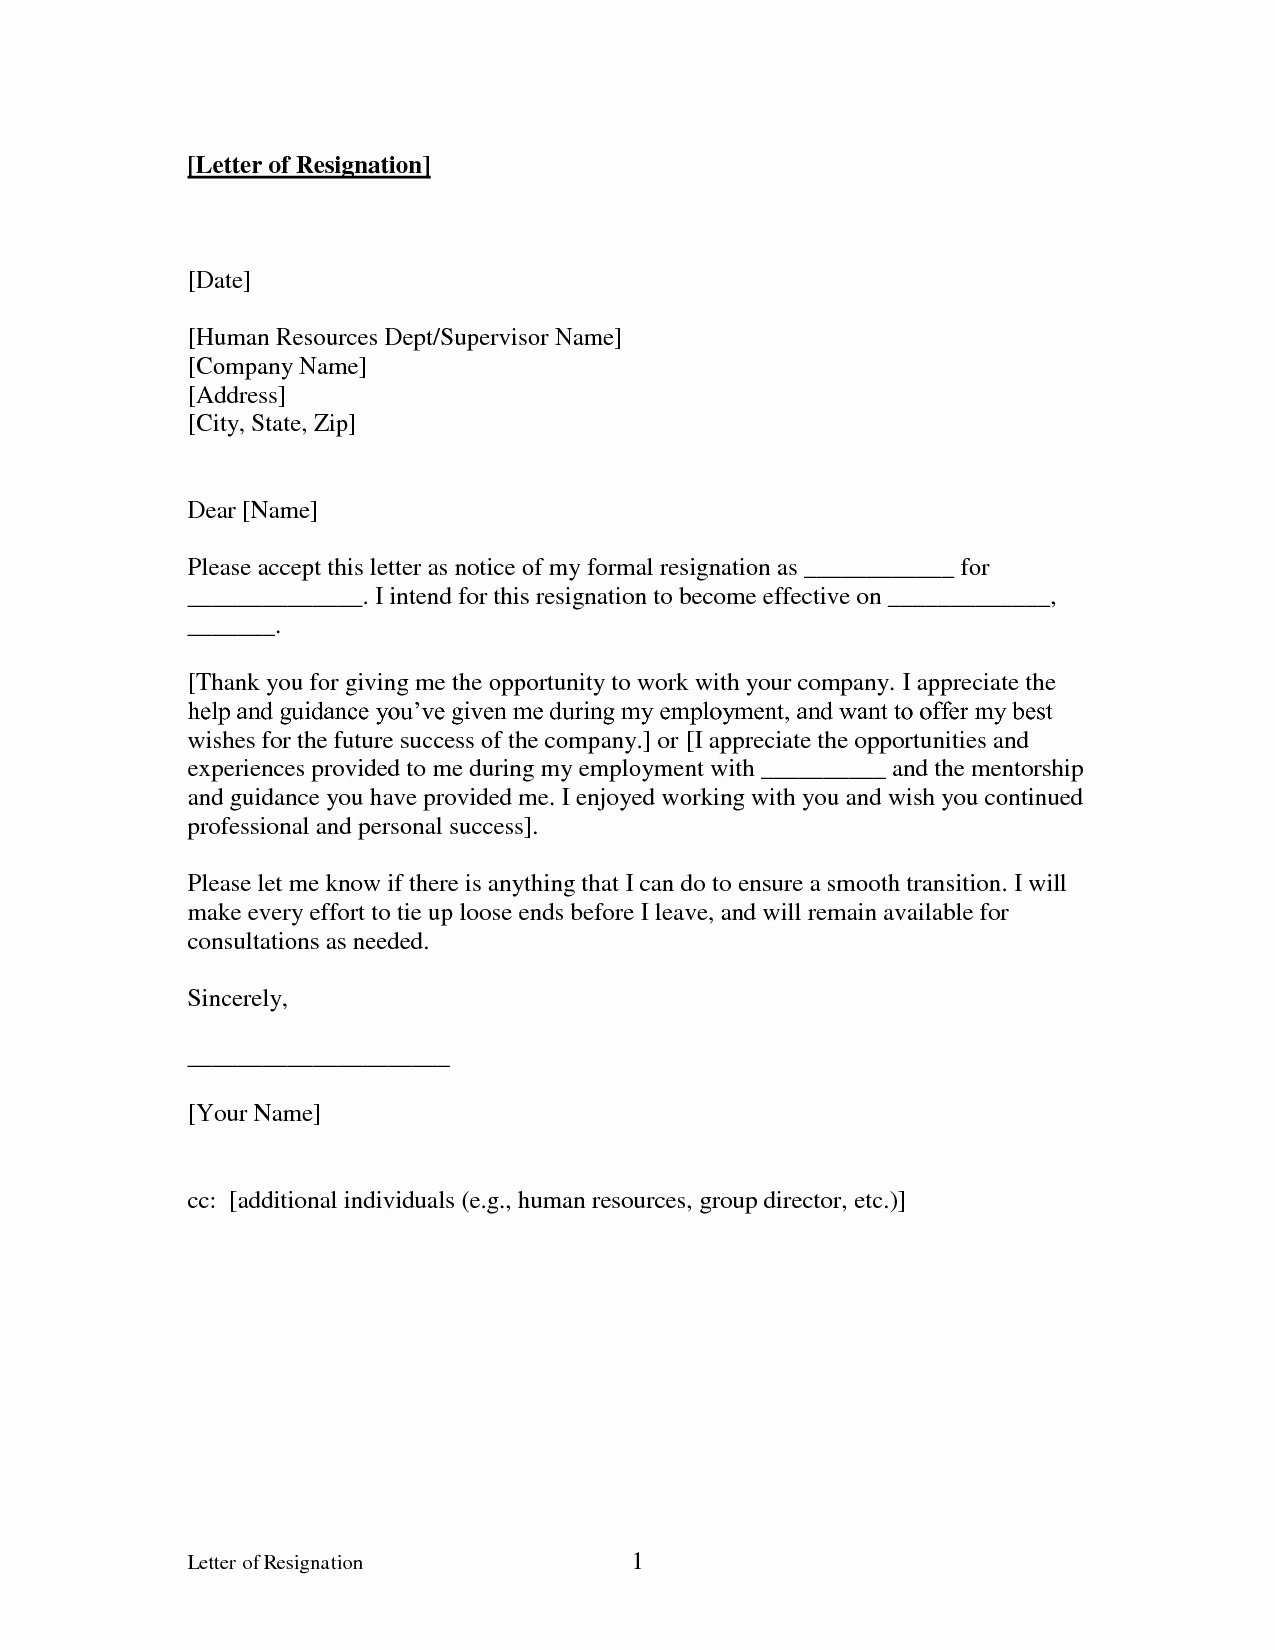 Form Letter Of Resignation Inspirational Printable Sample Letter Of Resignation form